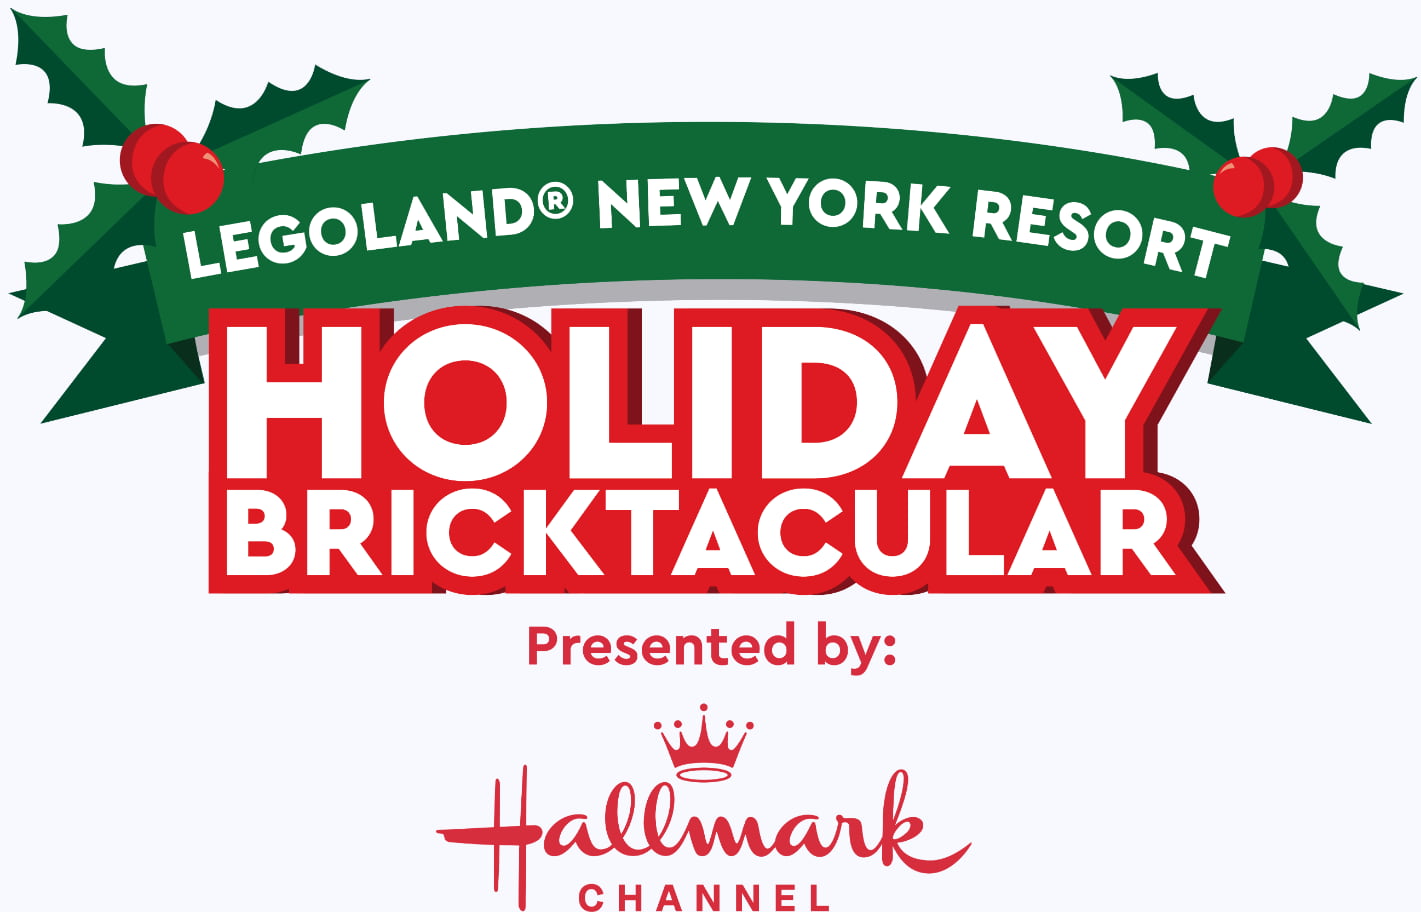 LEGOLAND New York Holiday Bricktacular